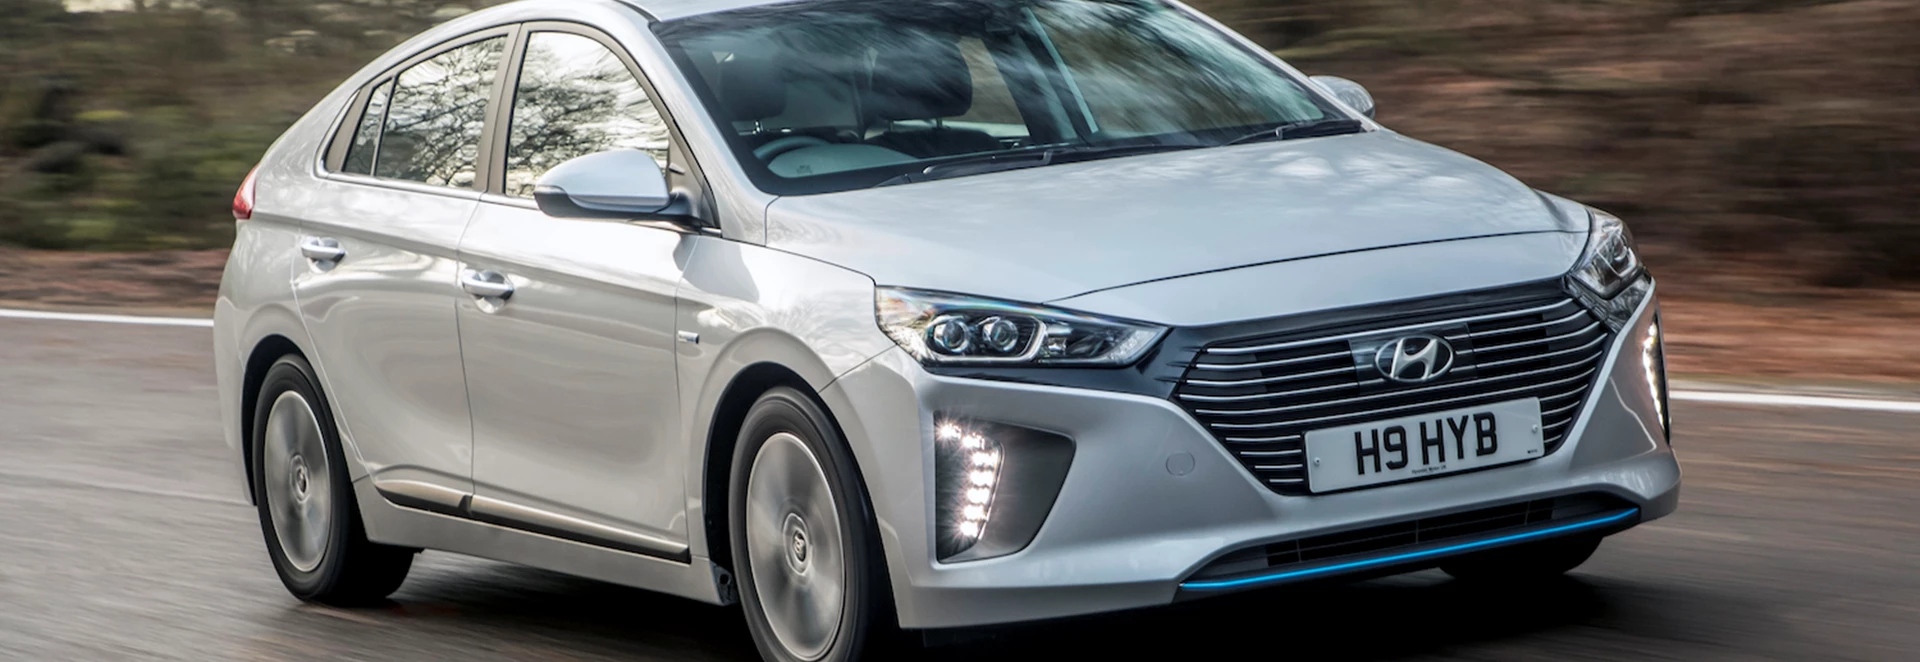 Hyundai Ioniq wins Plug-in Hybrid title at CCT100 Awards